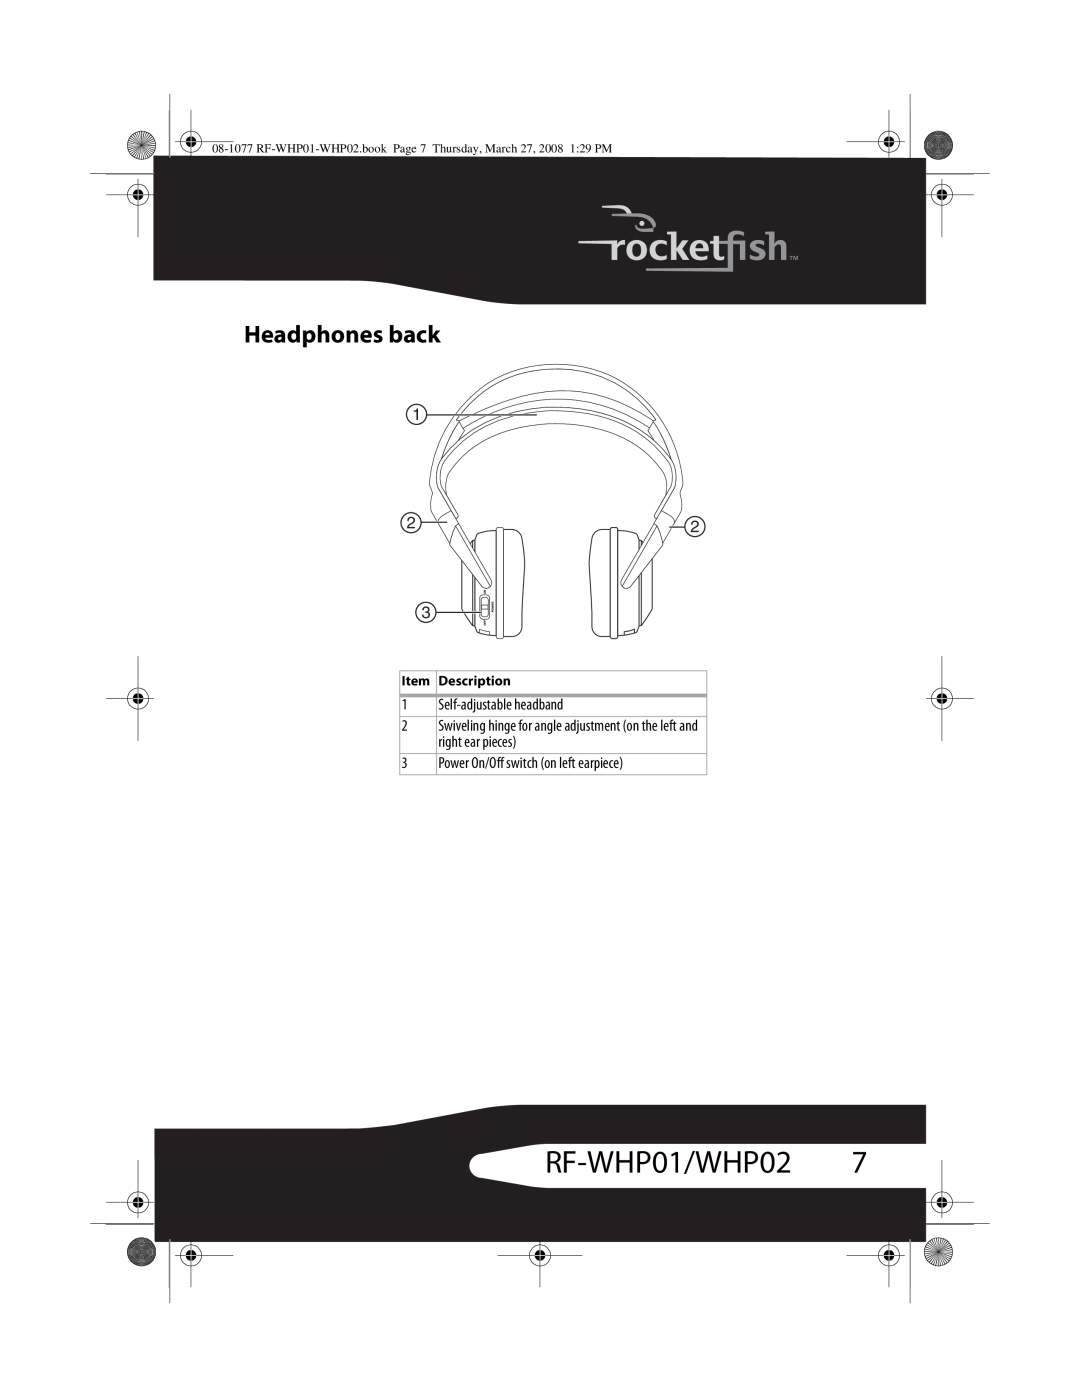 RocketFish RF-WHP02 RF-WHP01/WHP027, Headphones back, 1Self-adjustableheadband, 3Power On/Off switch on left earpiece 